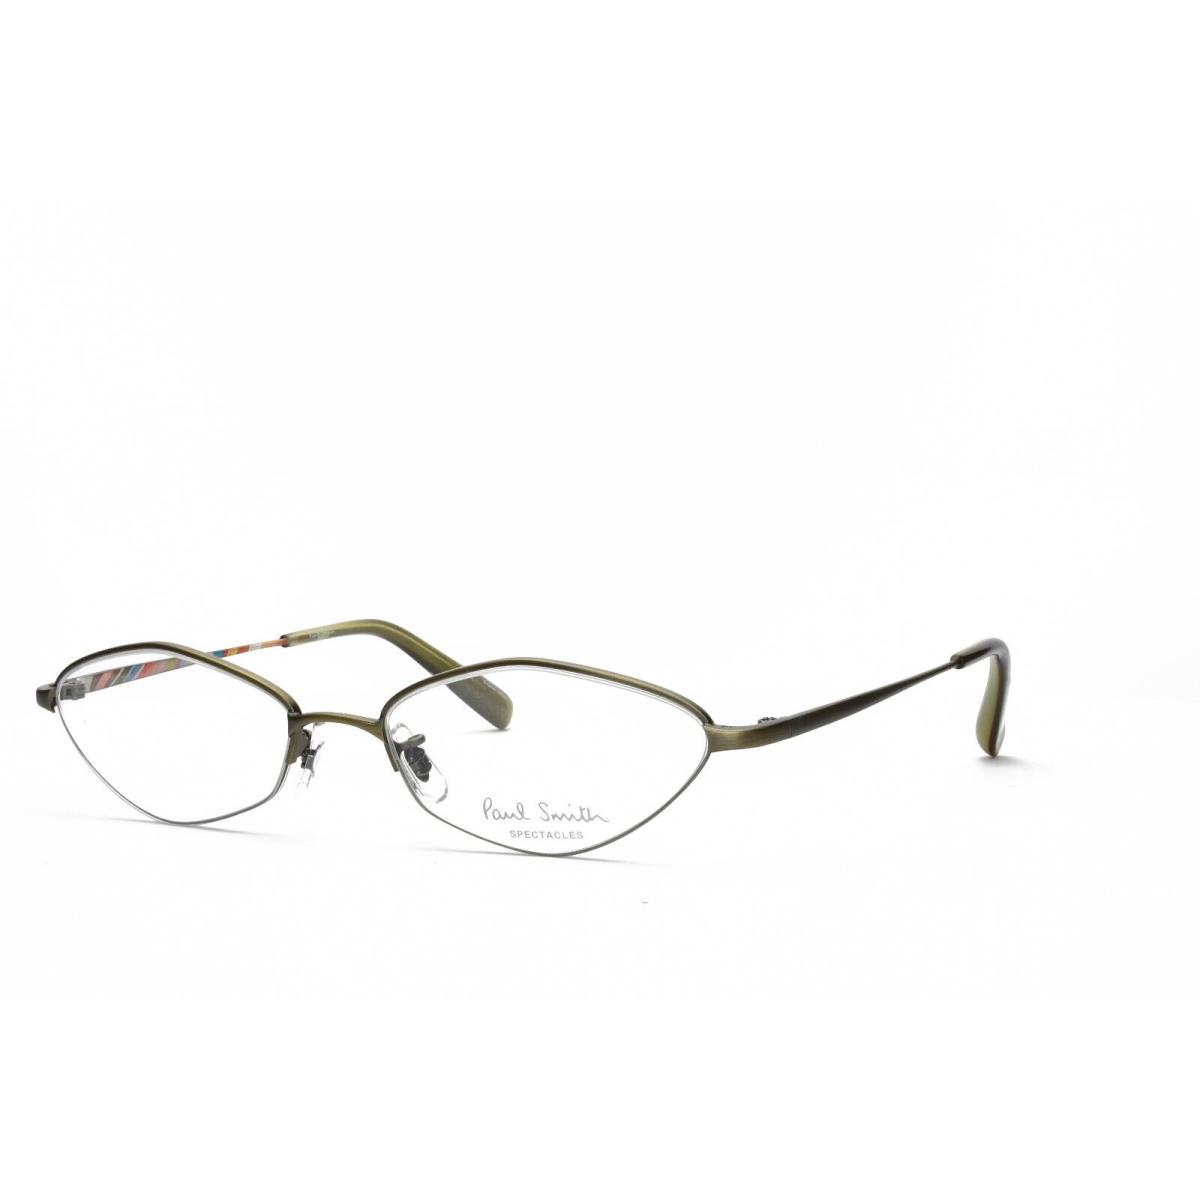 Paul Smith PS 1003 DE Eyeglasses Frames Only 51-17-138